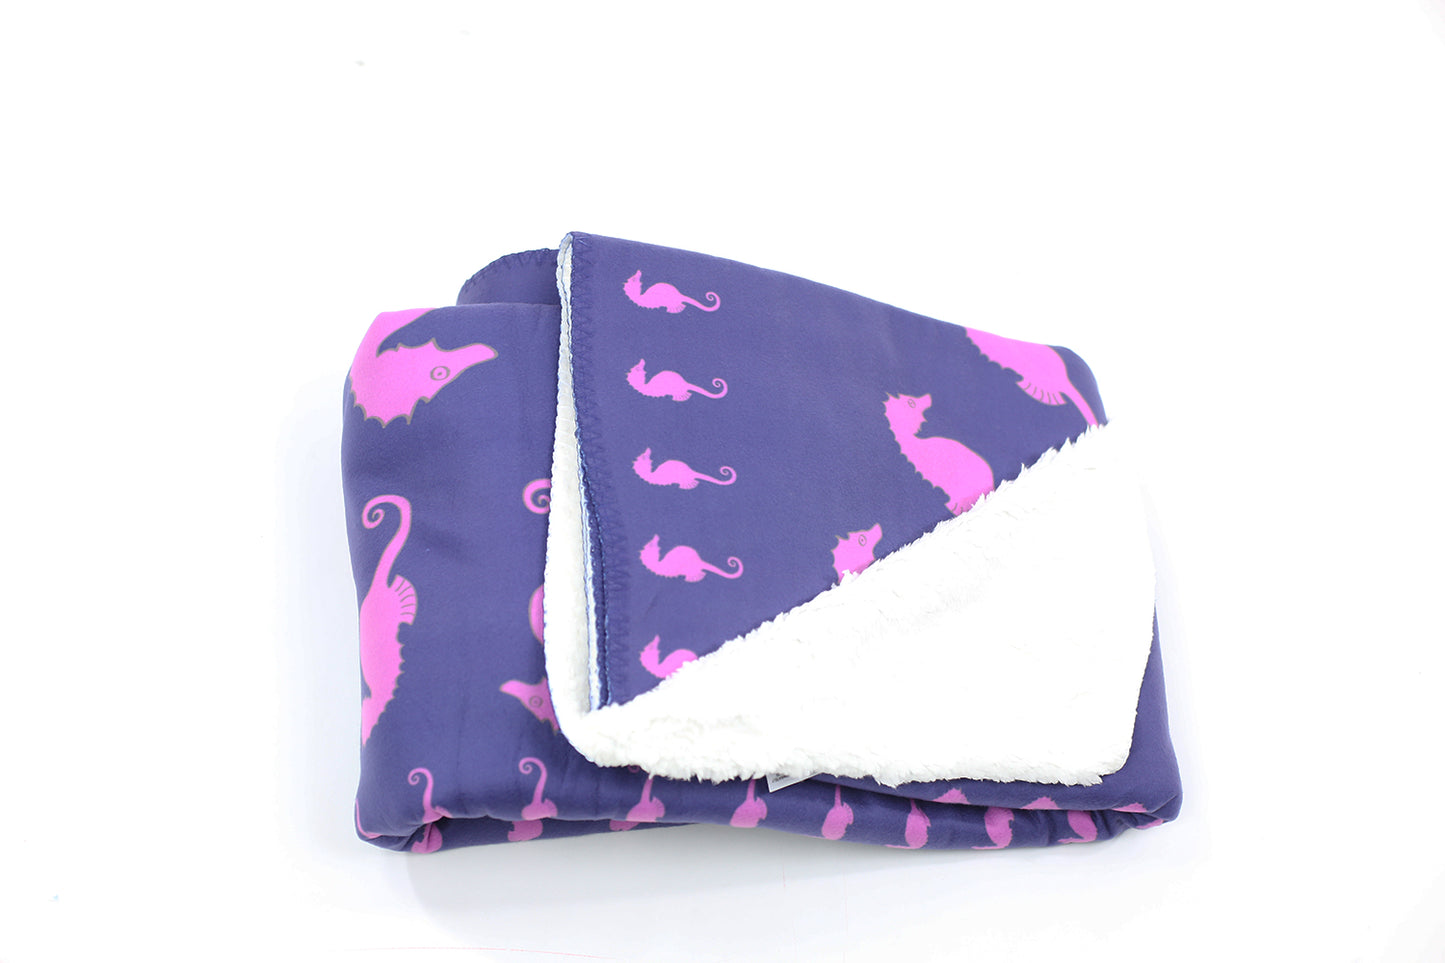 Seahorse Fleece Blanket - Pink on Navy - SummerTies